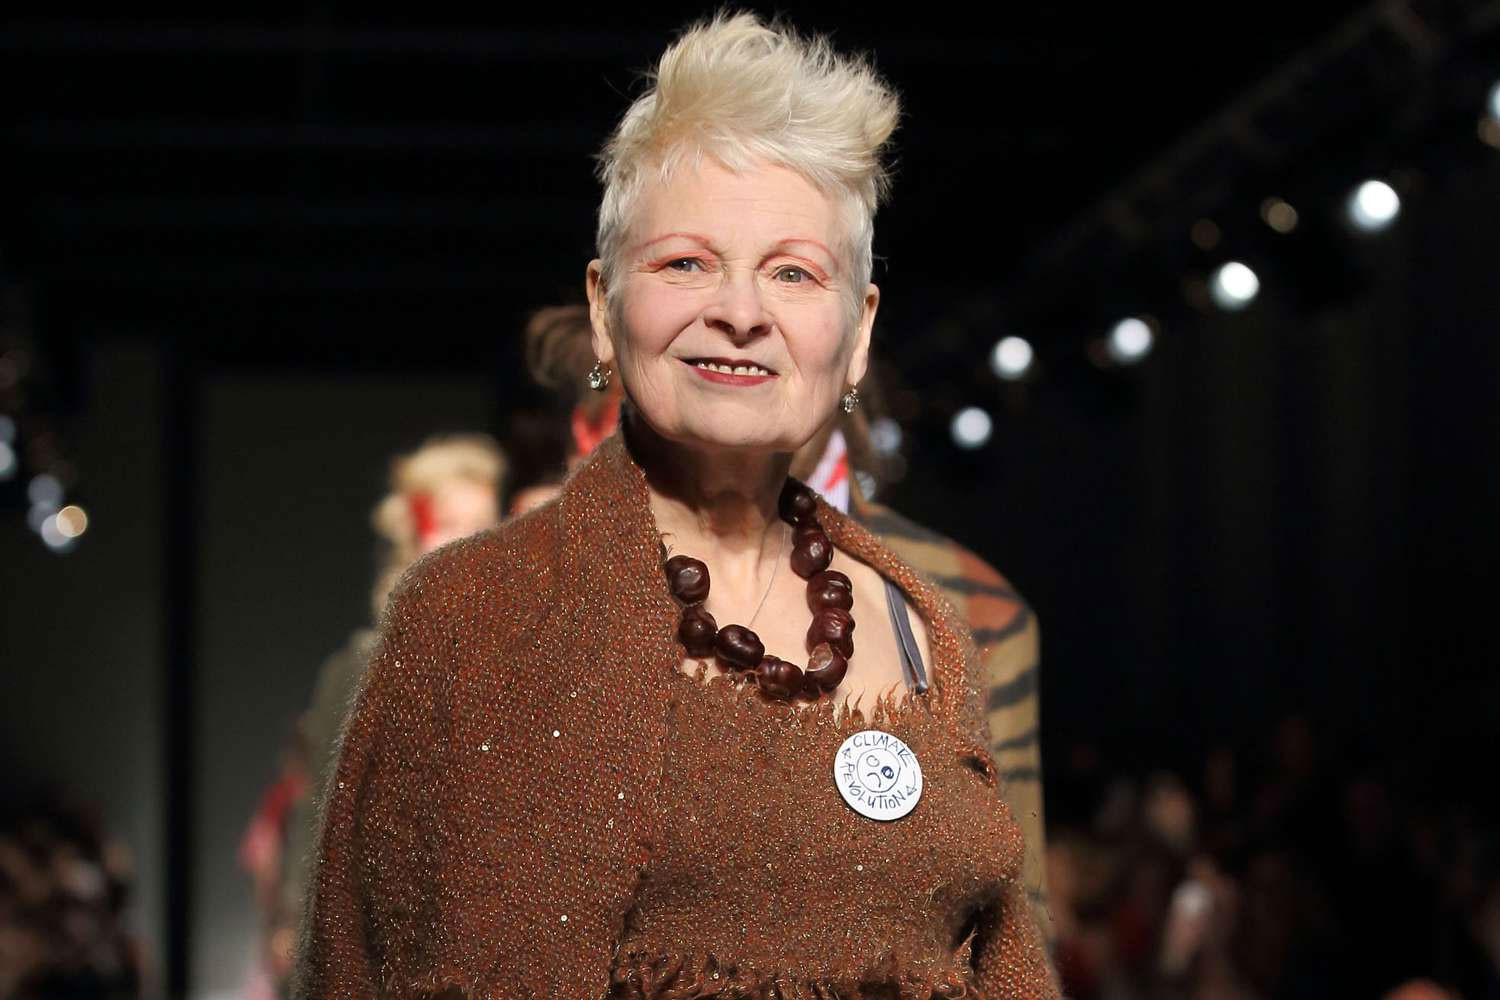 Vivienne Westwood's OBE Dress Sans-Underwear Goes Viral 30 Years Later